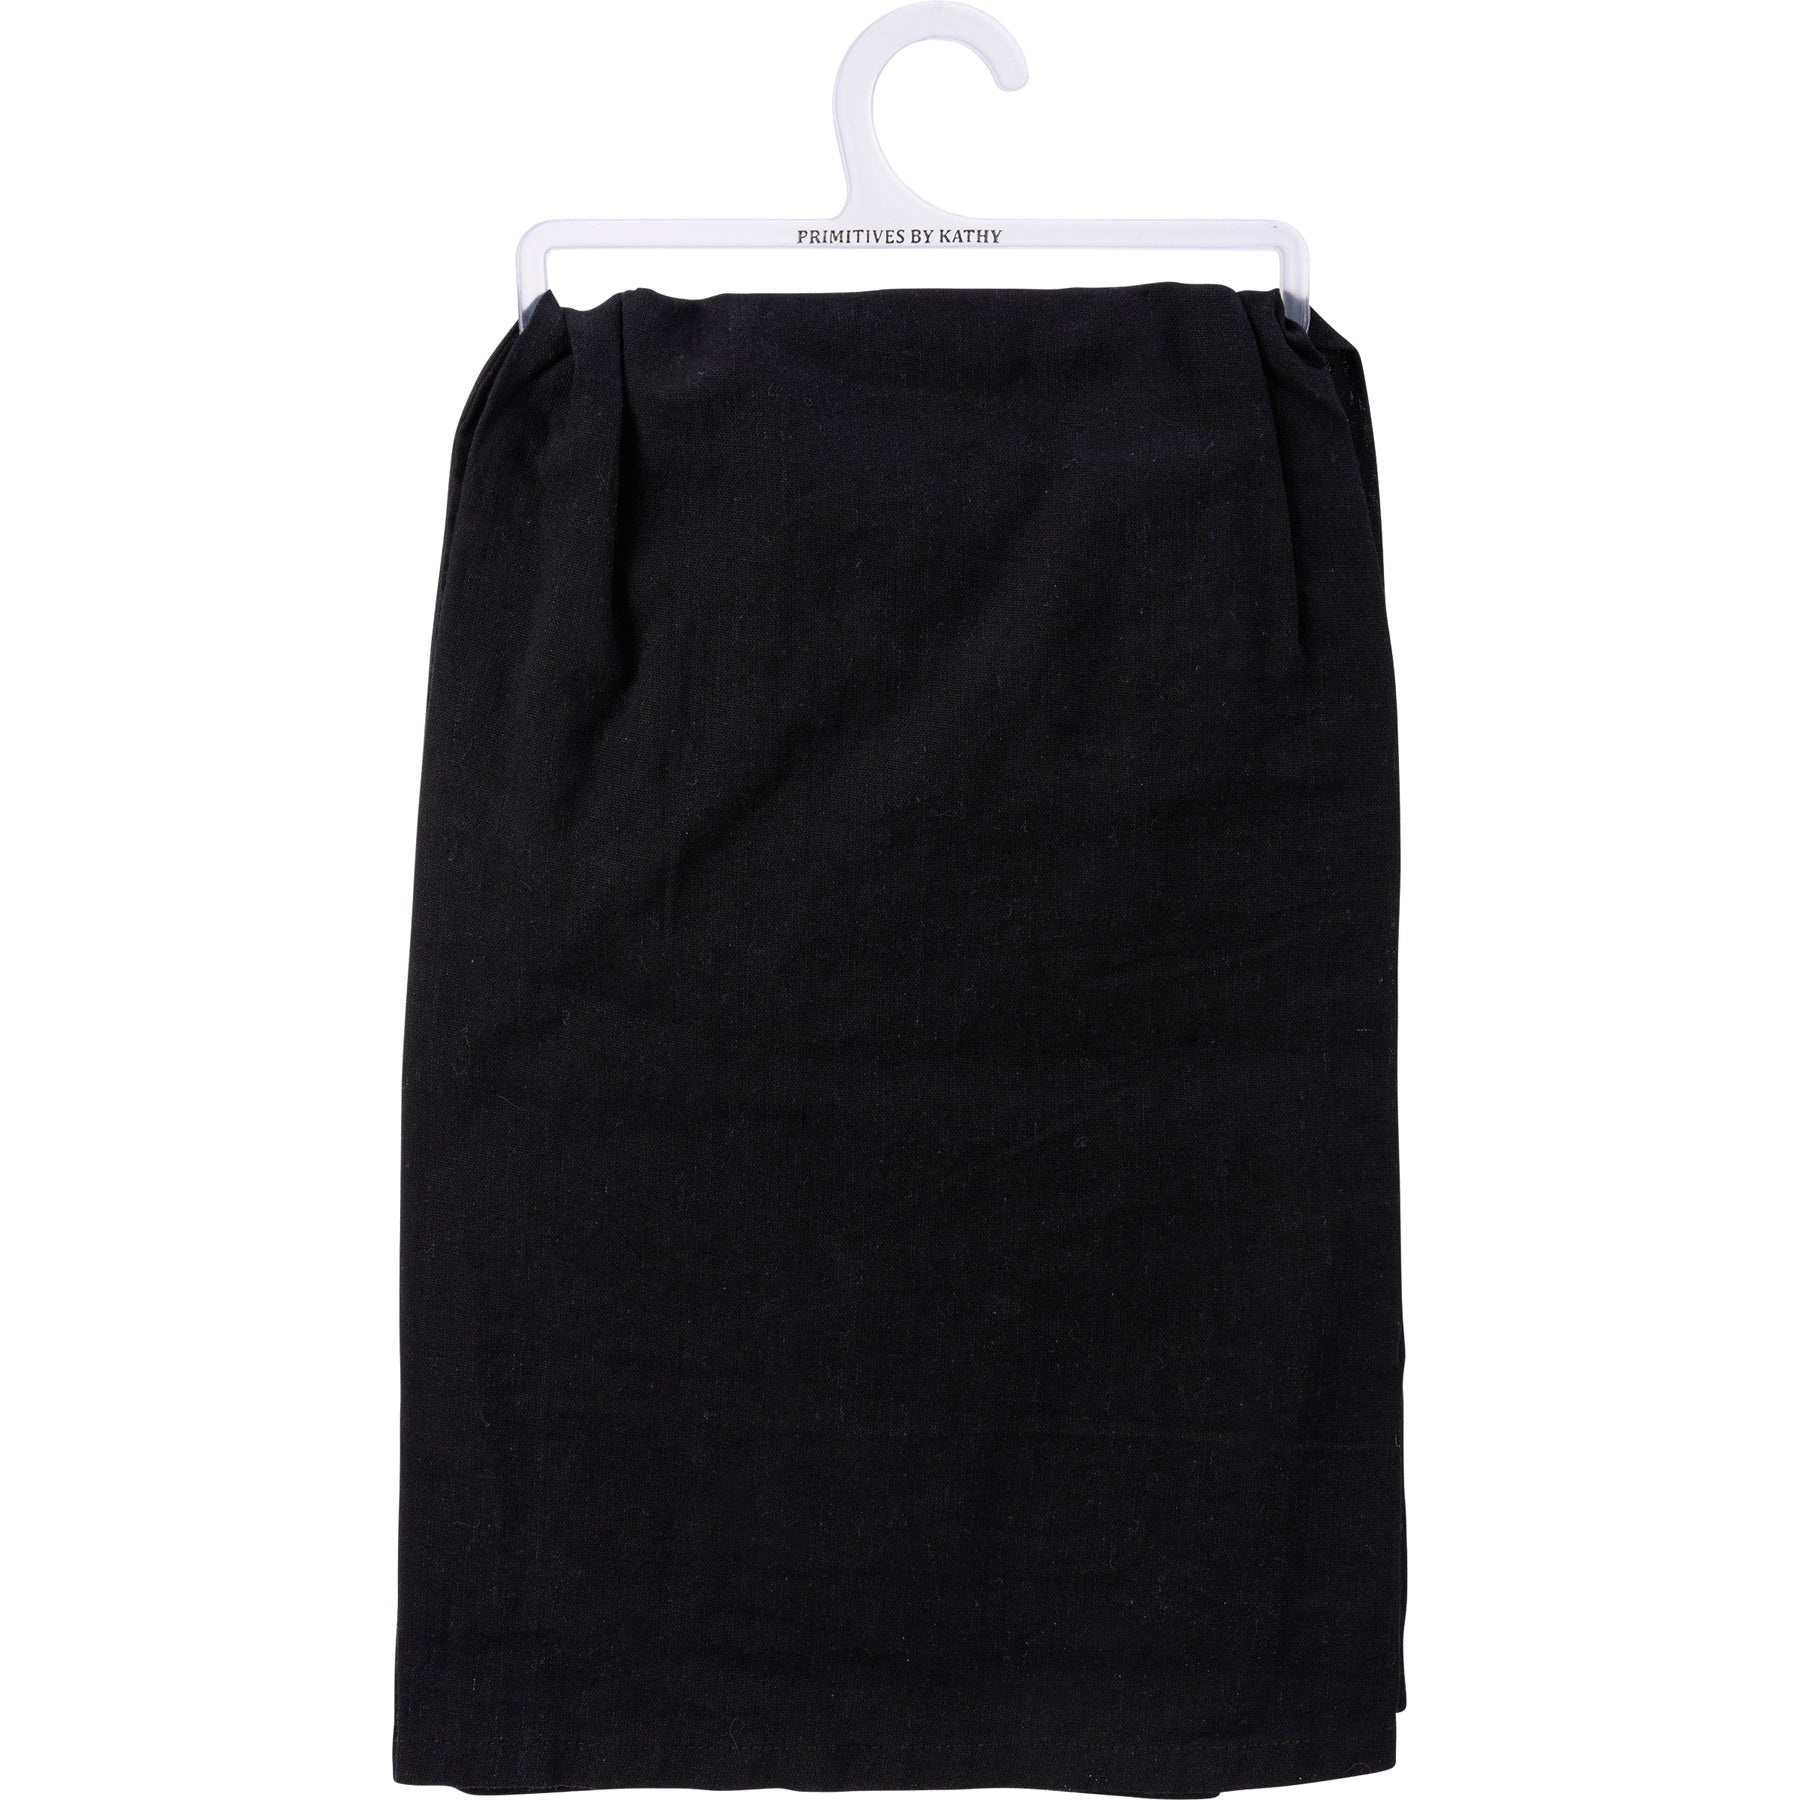 Lush - The One Who's Lit Like a Christmas Tree Funny Black Cotton Dish Cloth Towel | 28" x 28"